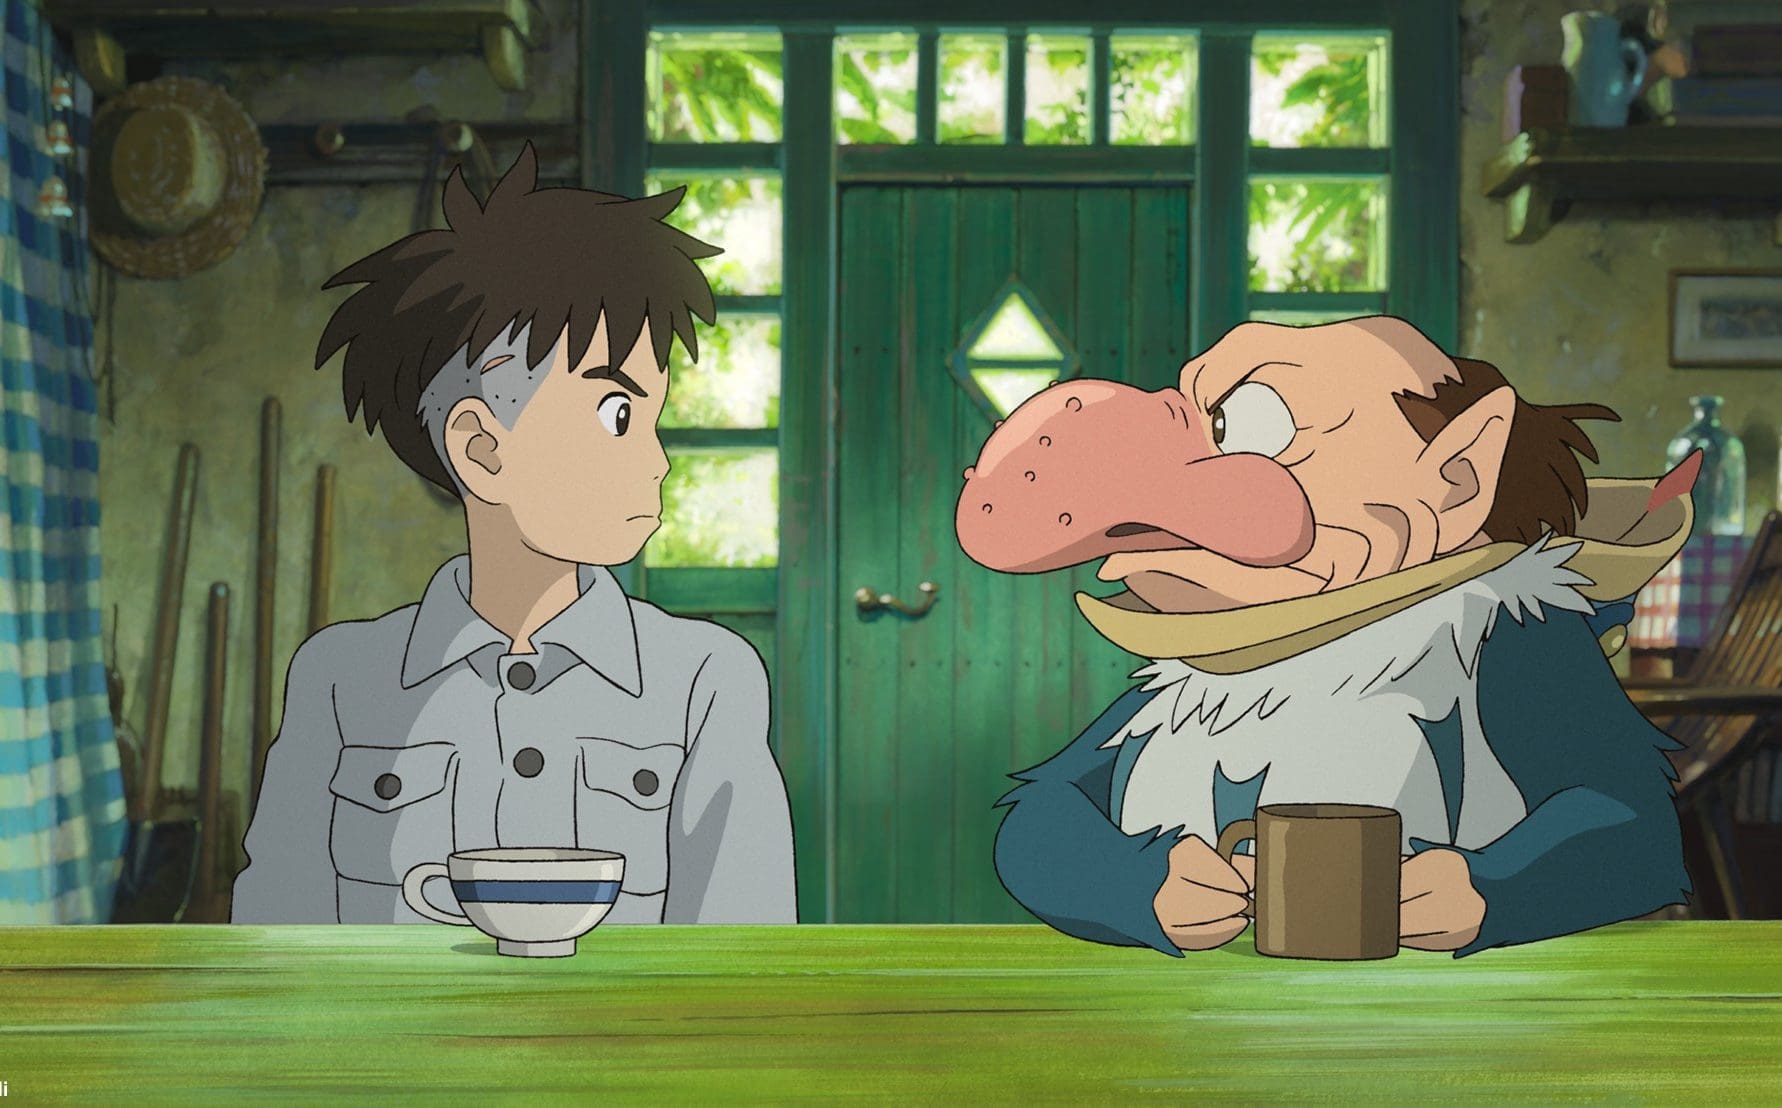 Photo from Miyazaki's Boy and the Heron